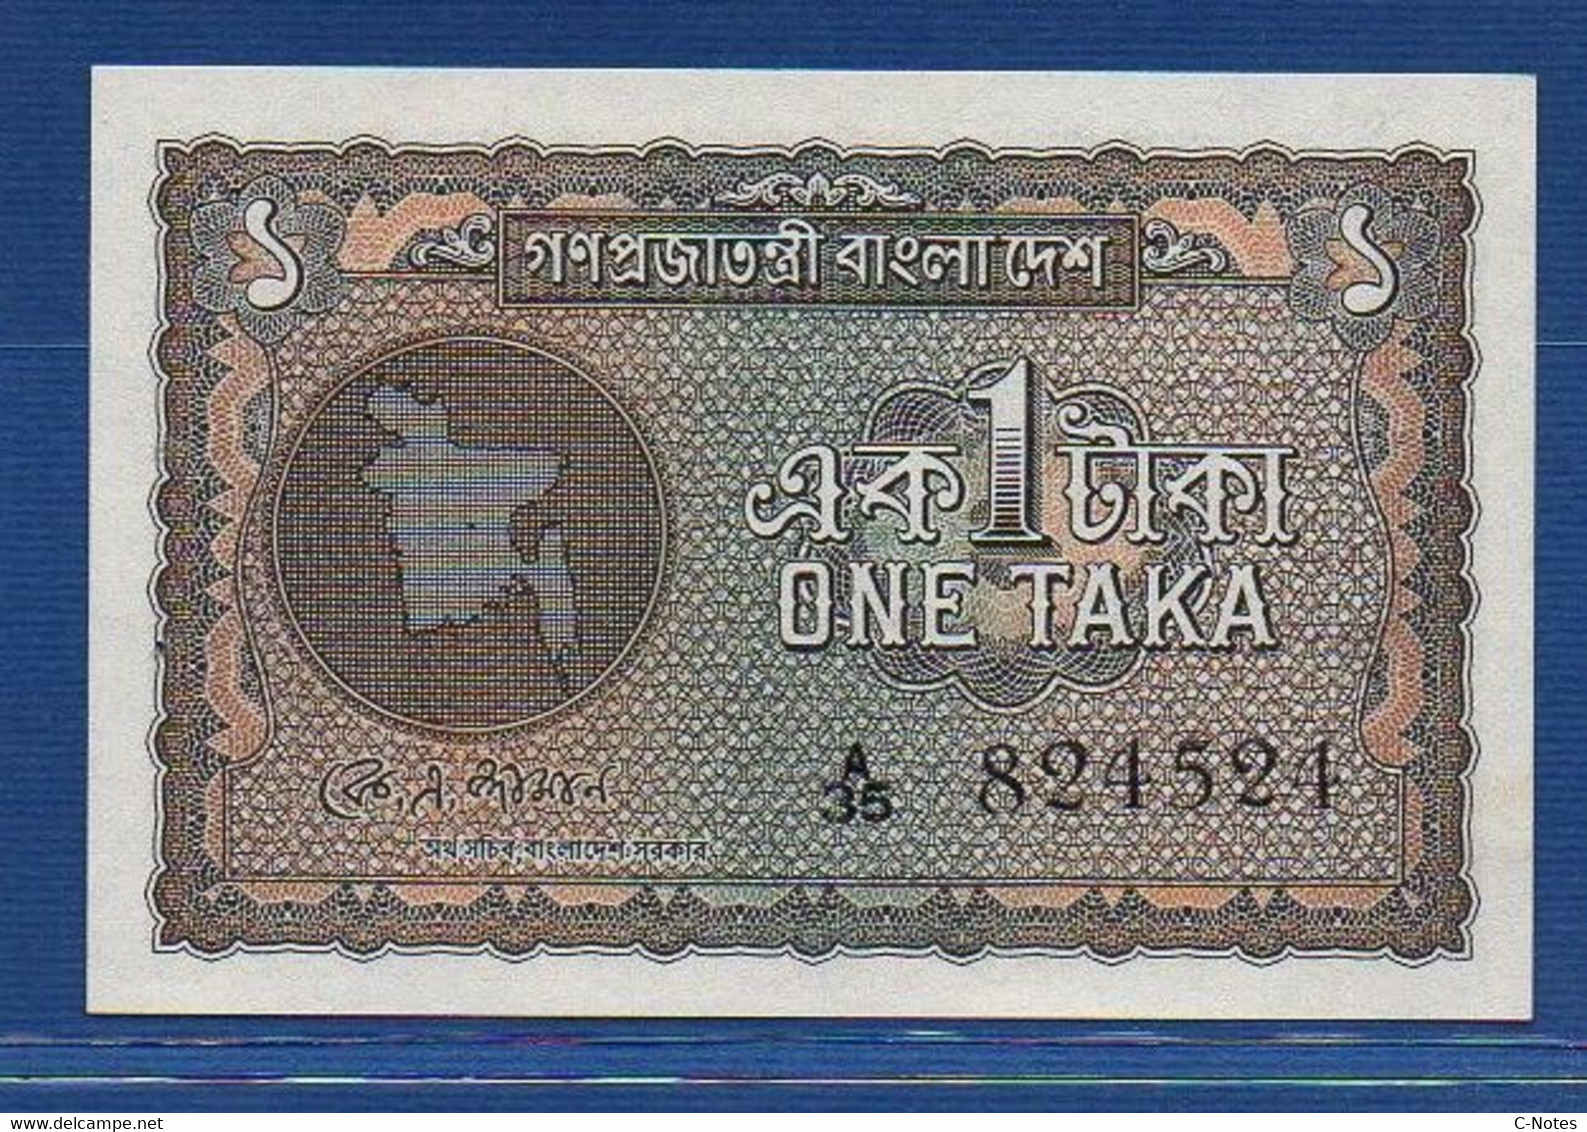 BANGLADESH - P. 4 - 1 TAKA ND (1972), UNC, Serie A/35 824524 - Bangladesh